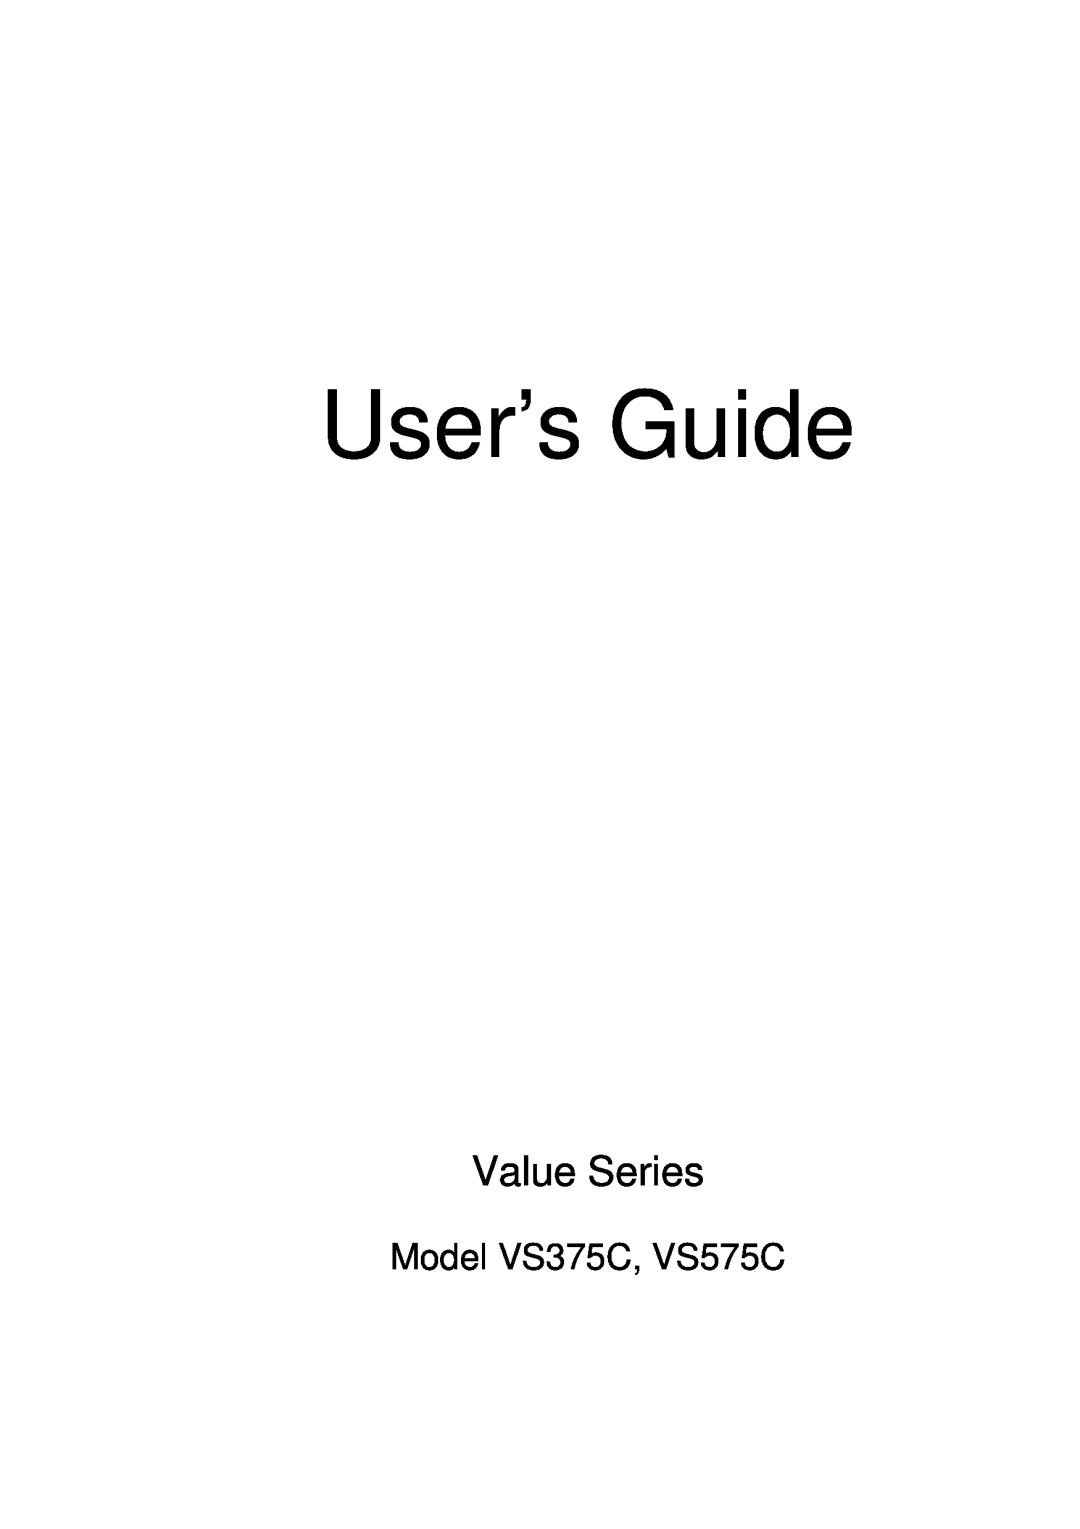 ViewSonic manual User’s Guide, Value Series, Model VS375C, VS575C 